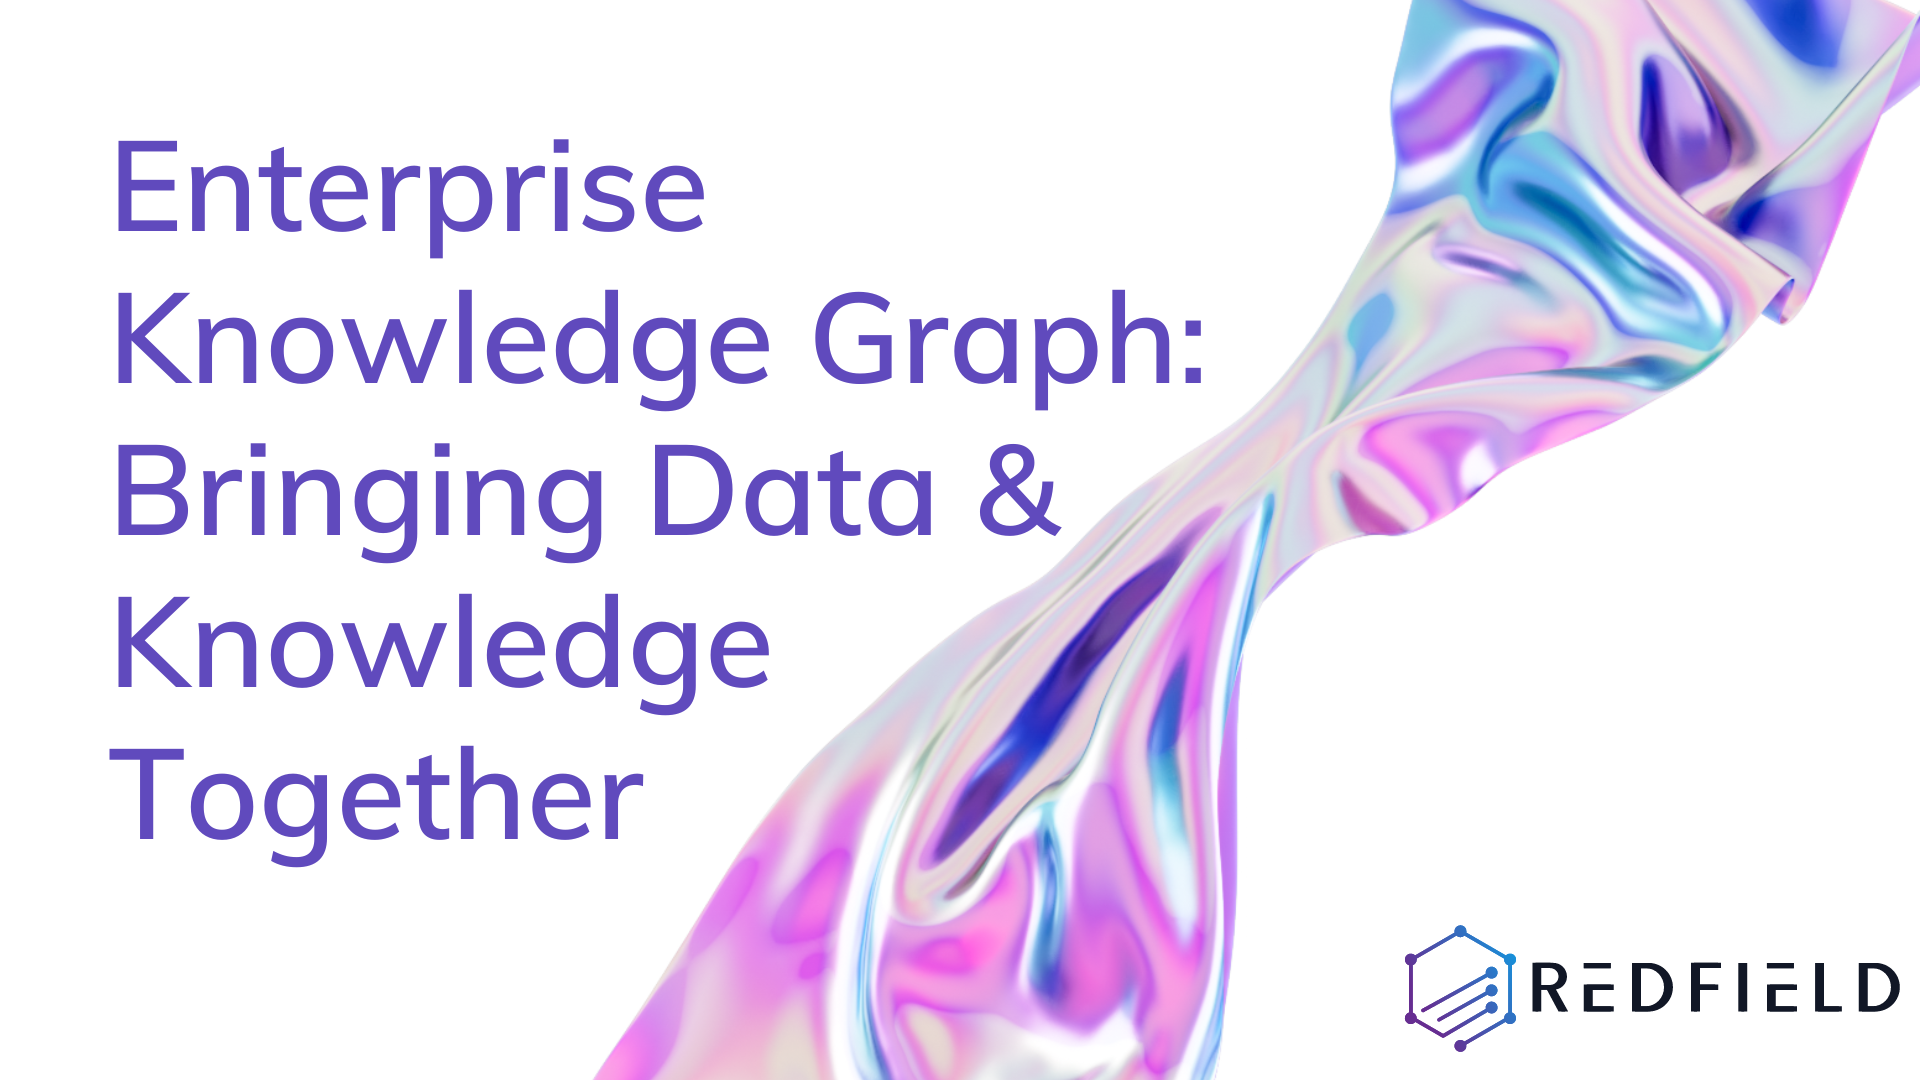 Enterprise Knowledge Graph: Bringing Data & Knowledge Together